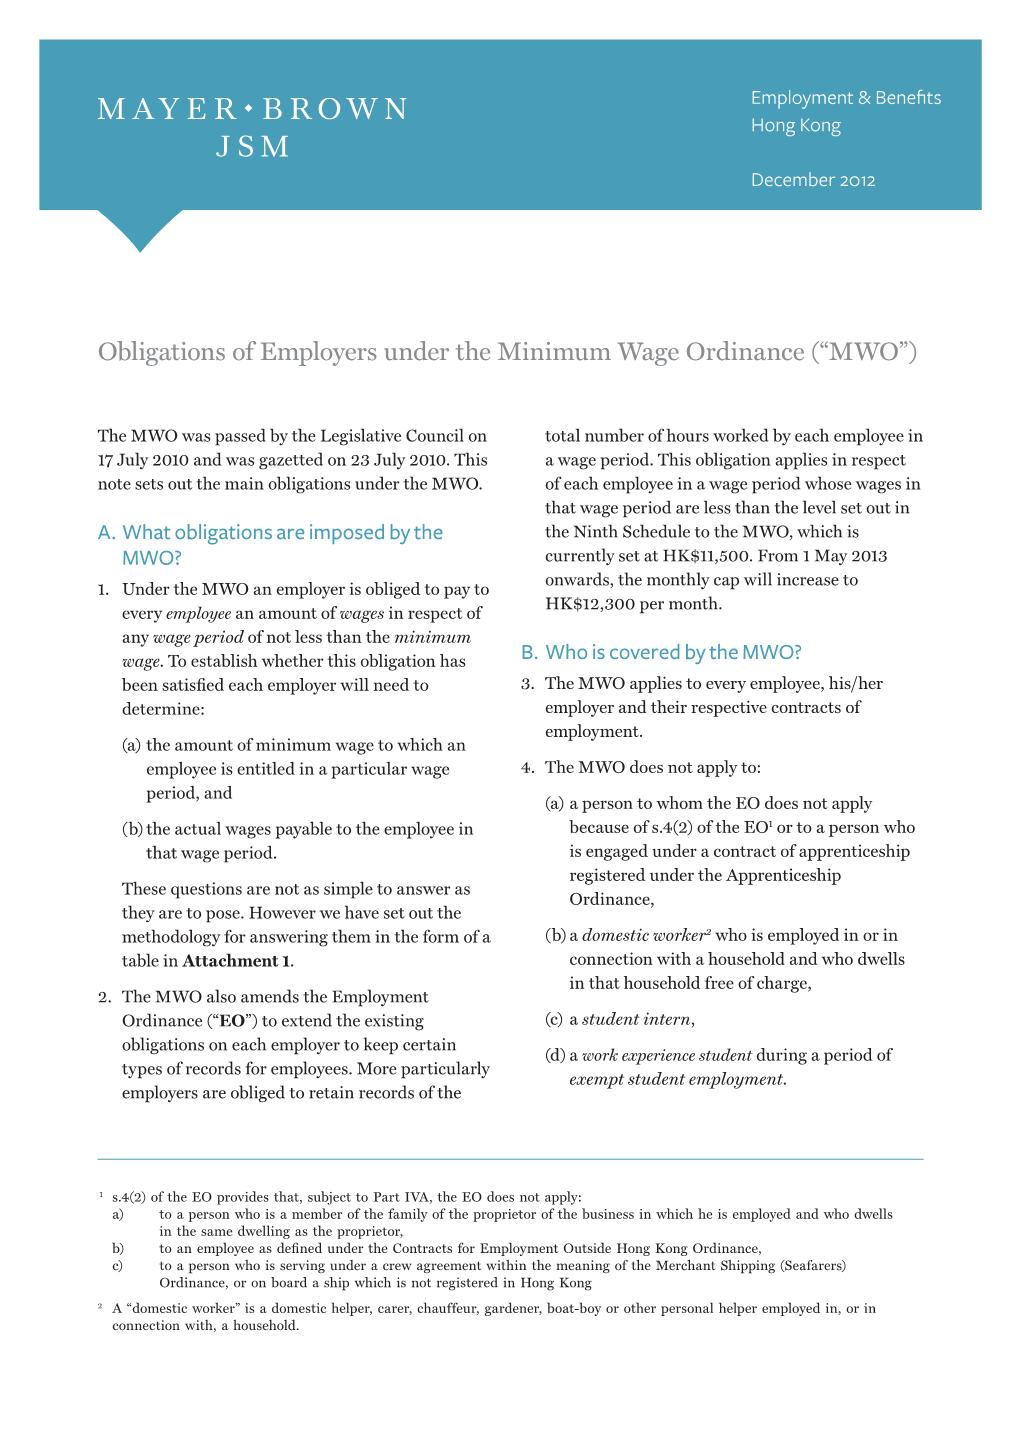 Obligations of Employers Under the Minimum Wage Ordinance (“MWO”)